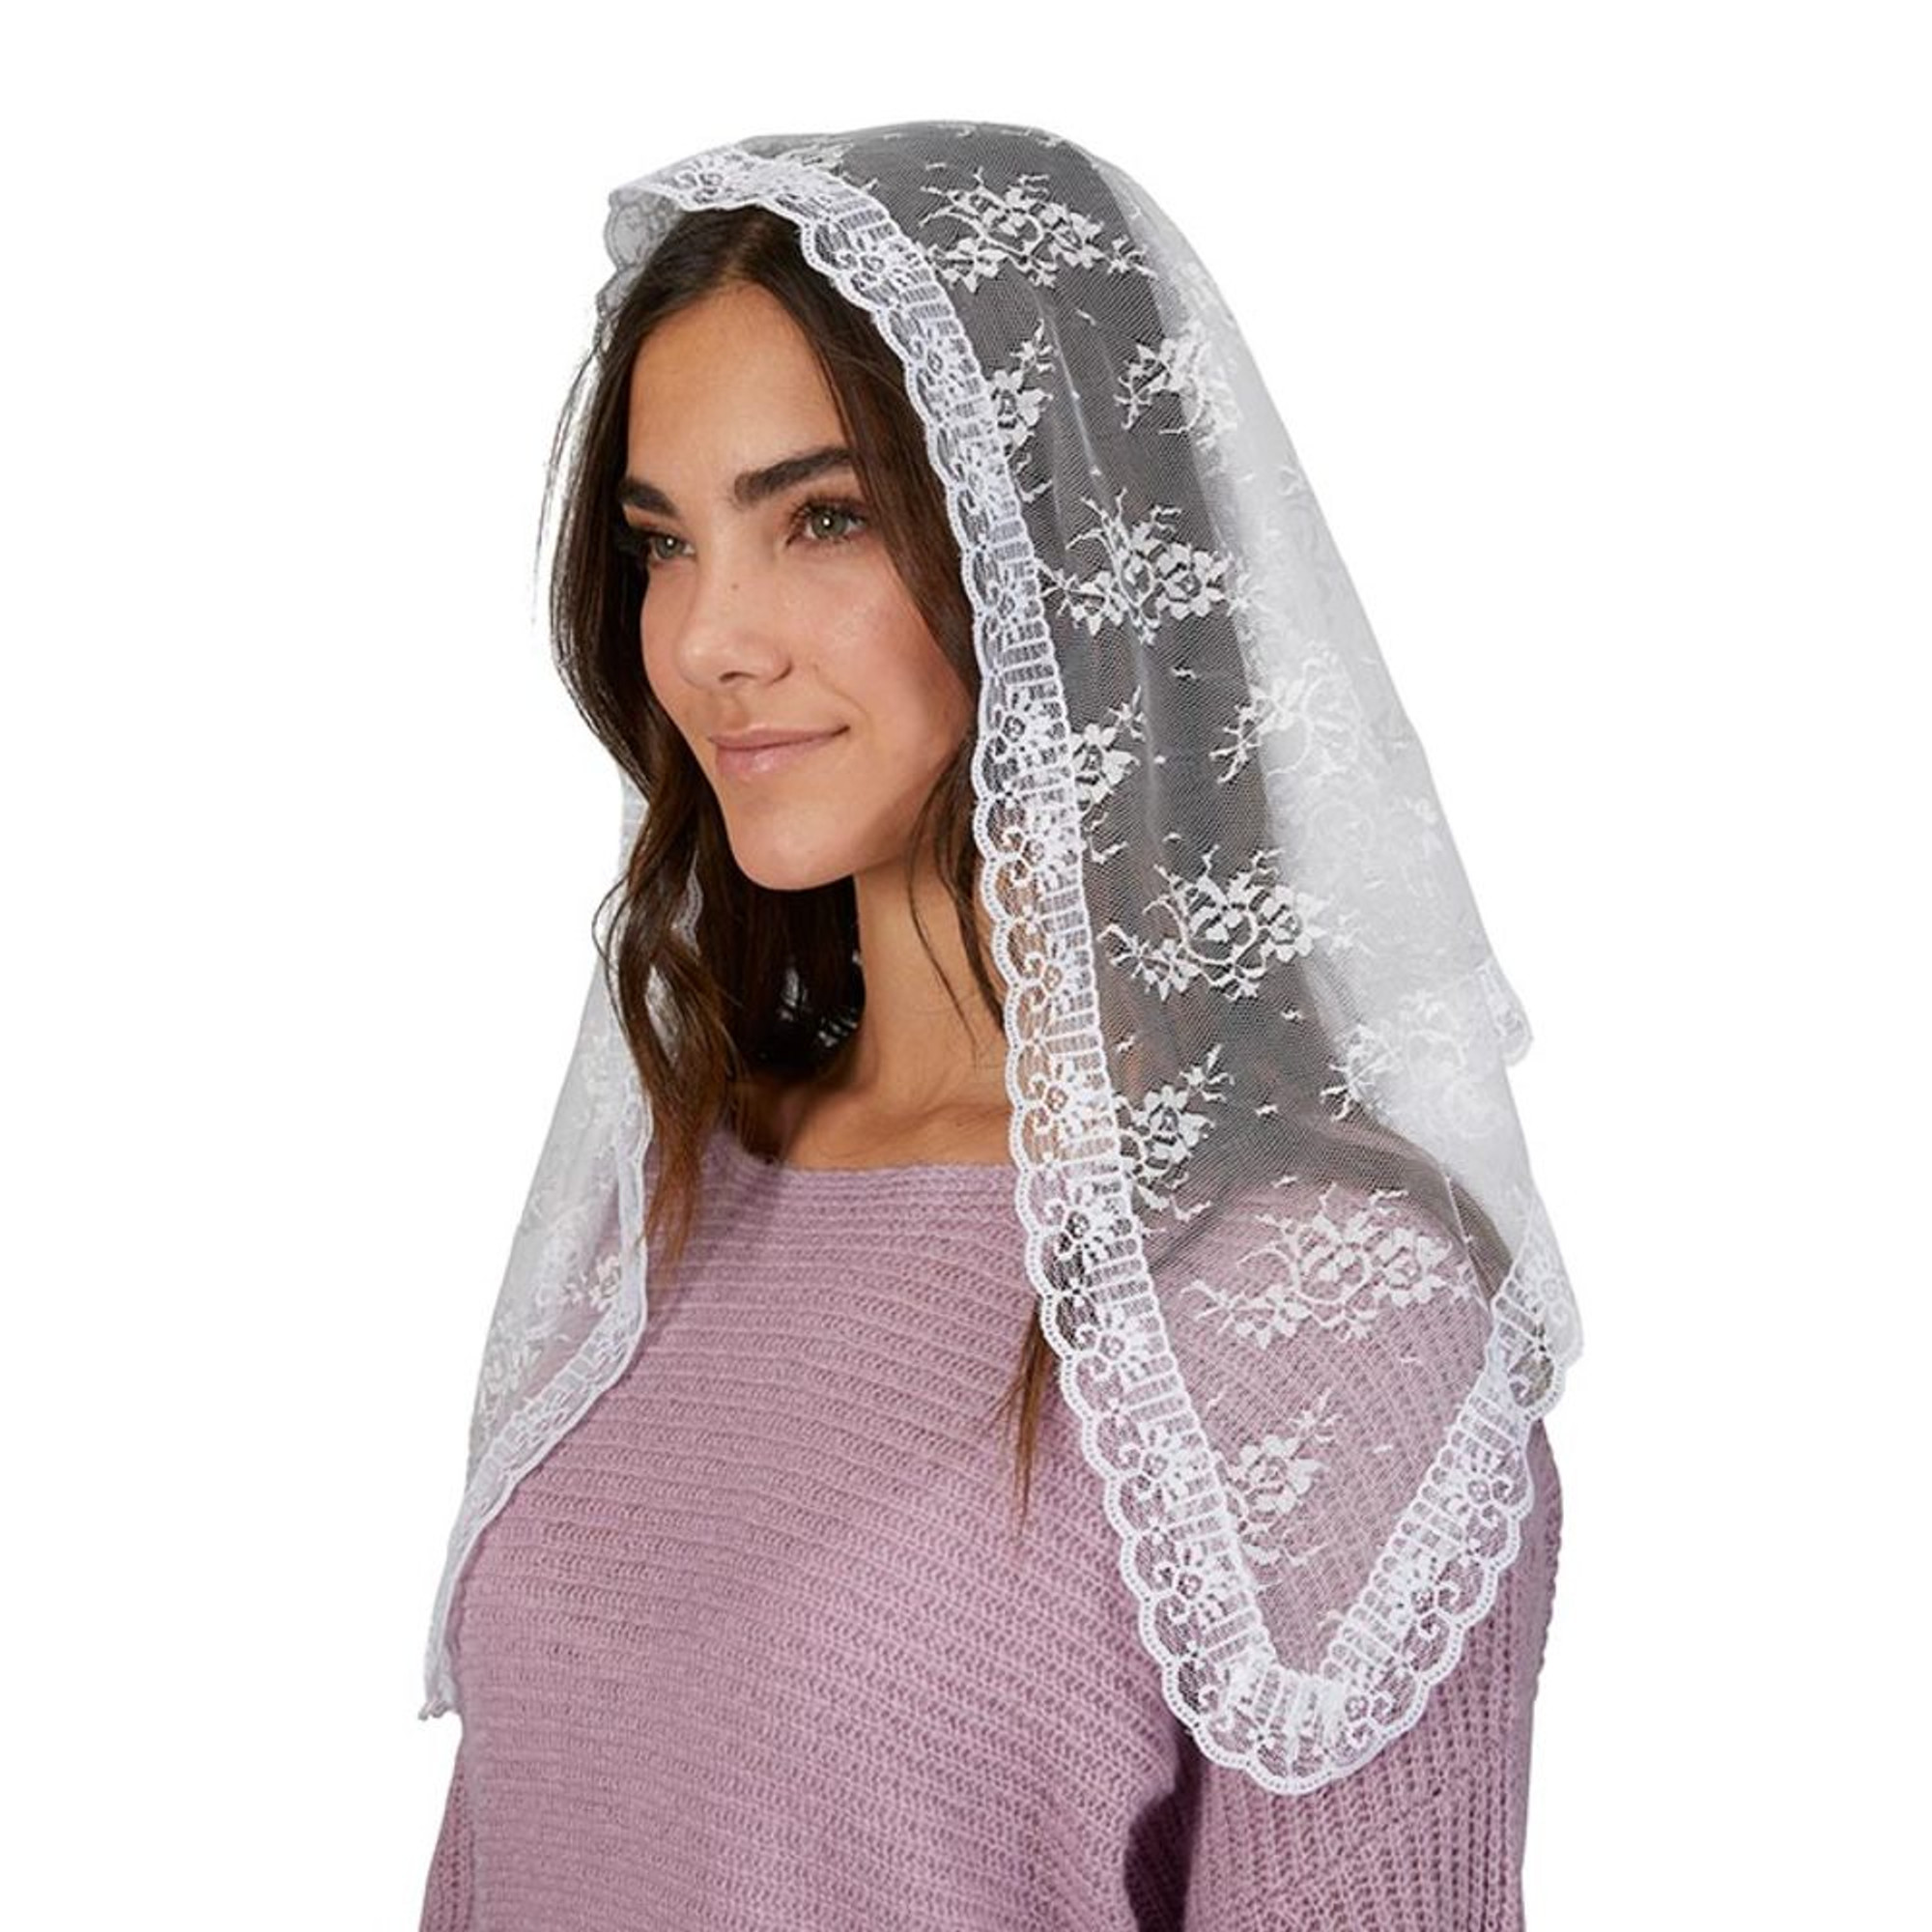 Traditional White Lace Chapel Veil | The Catholic Company®